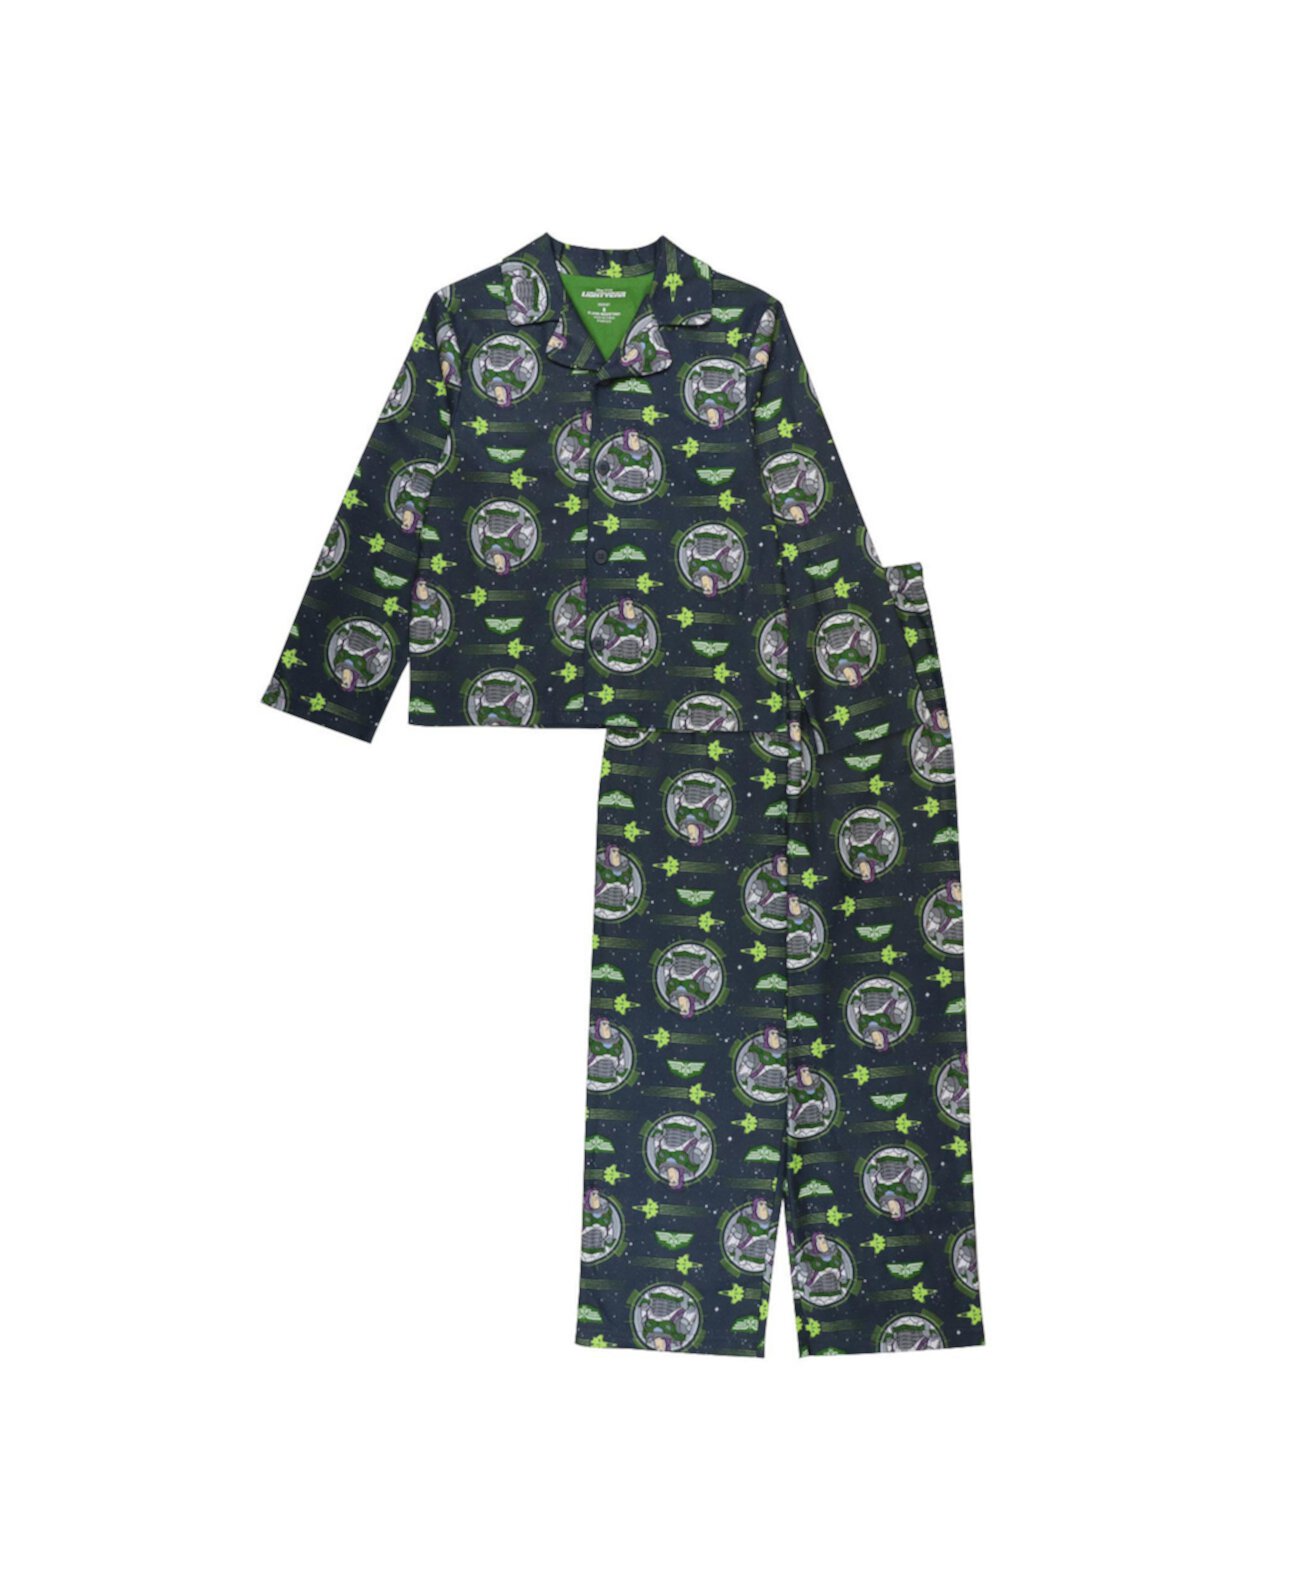 Топ и пижама Little Boys Lightyear, комплект из 2 предметов Toy Story